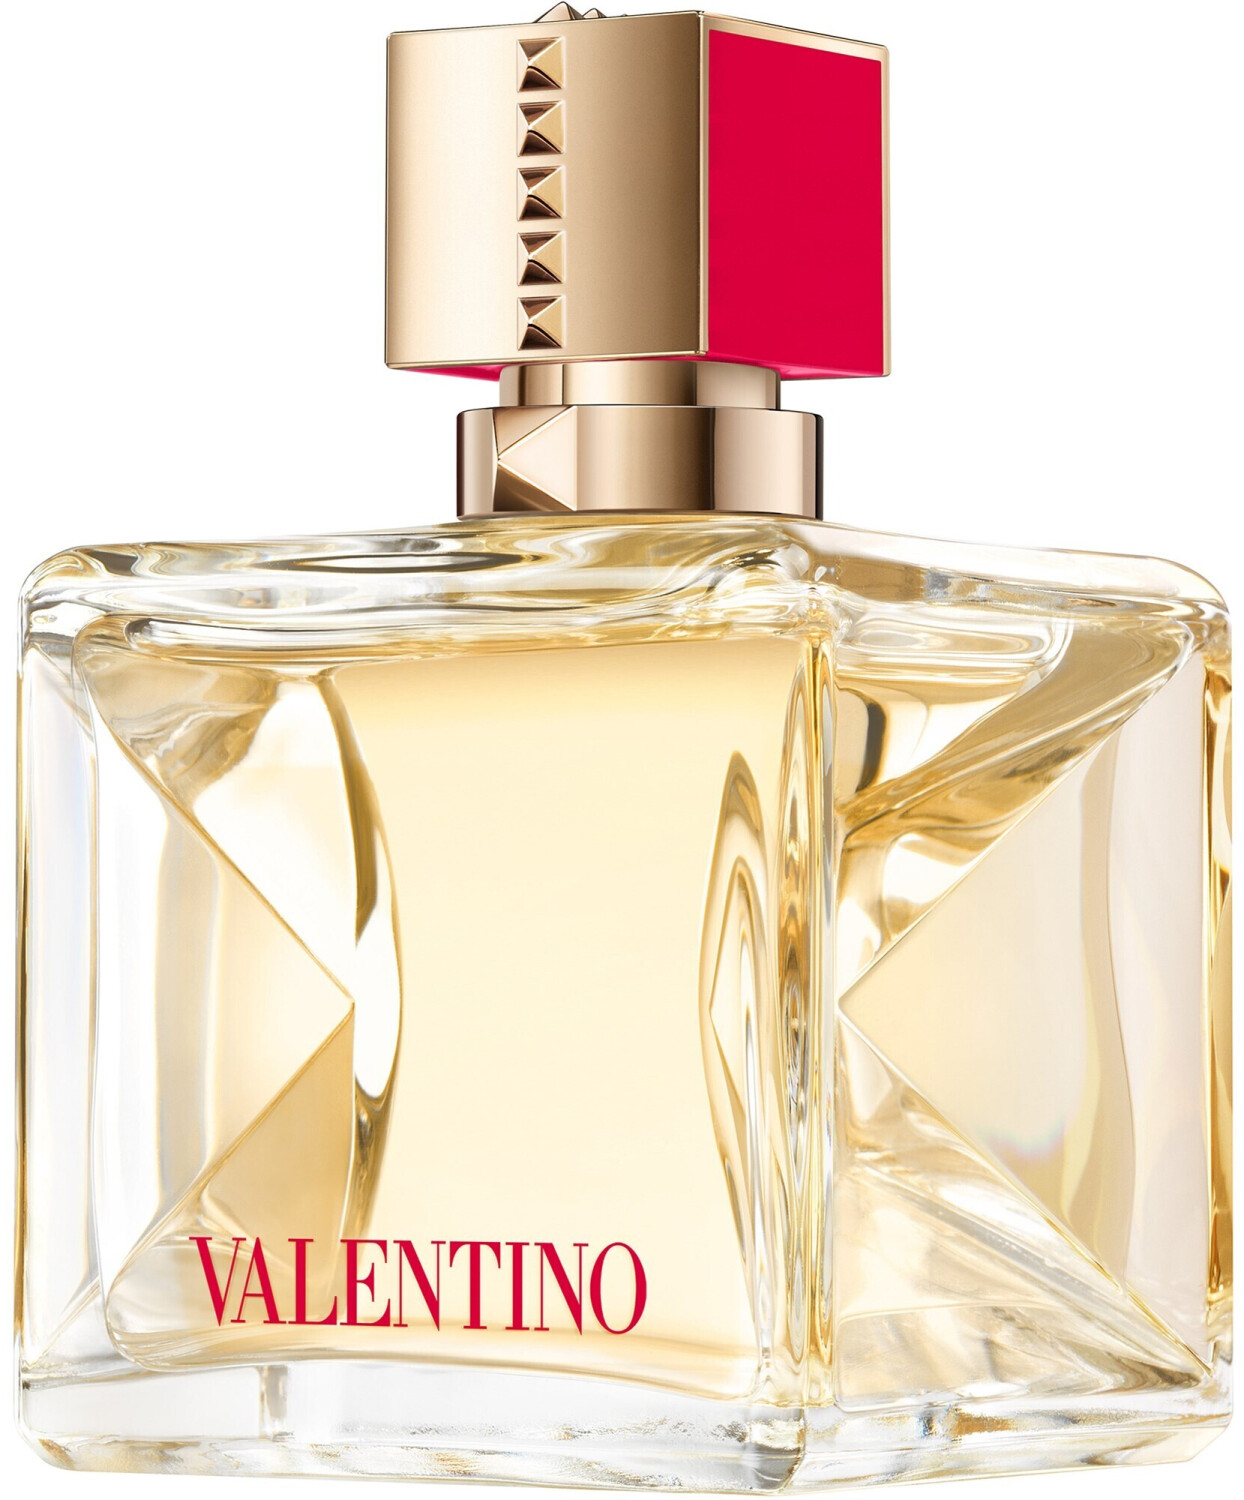 Buy Valentino Voce Viva Eau de Parfum (100ml) from £59.00 (Today